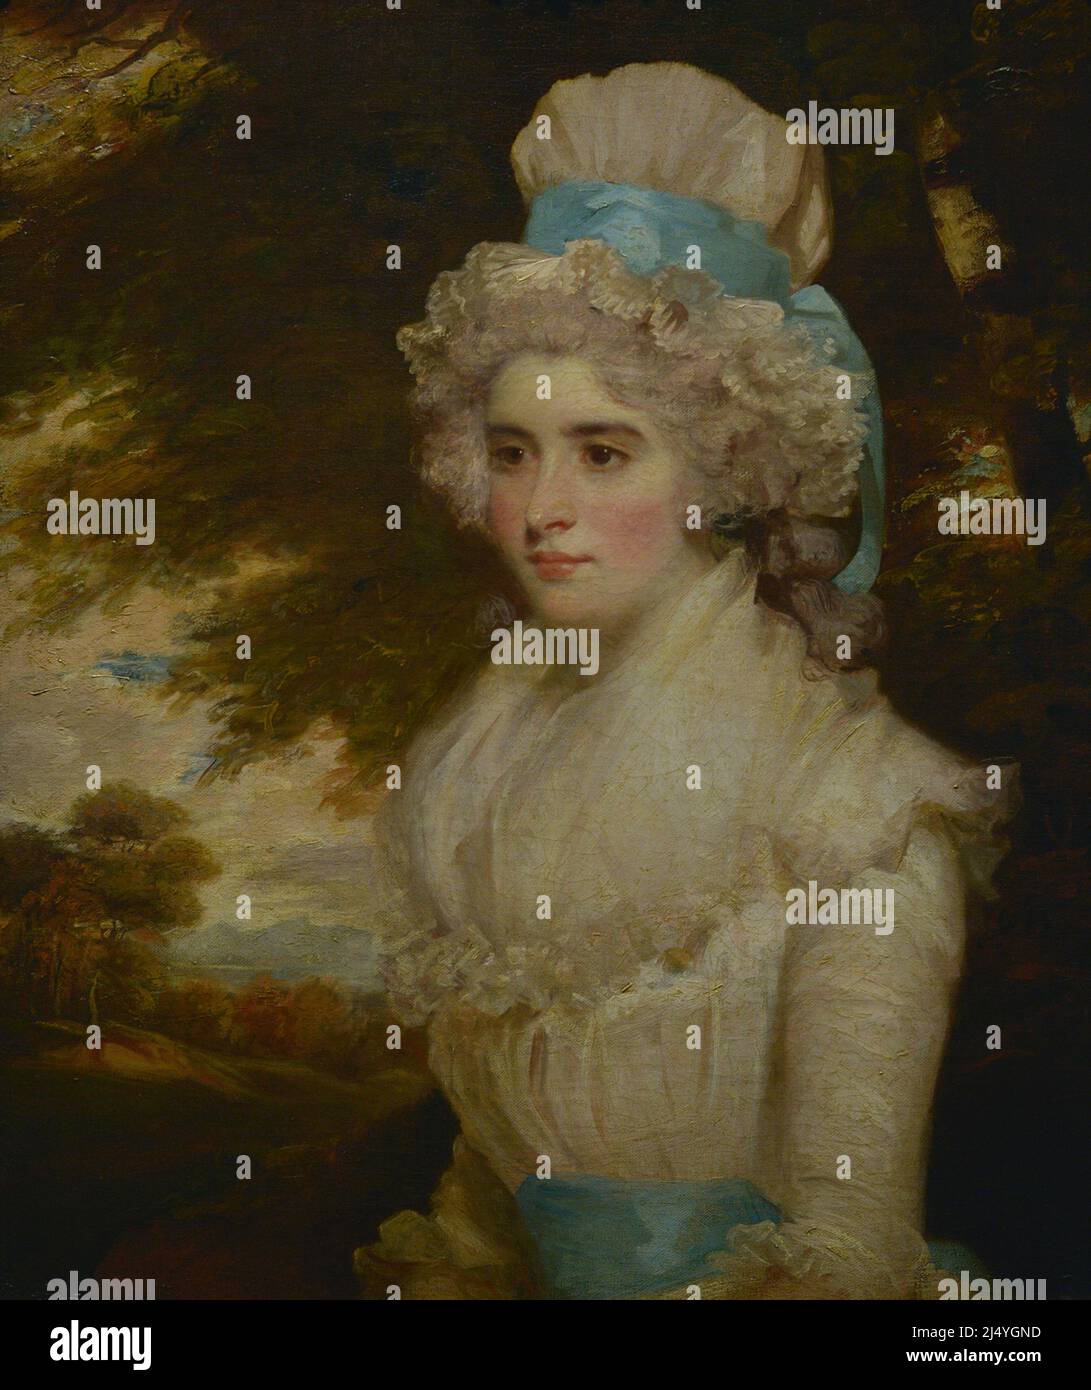 John Hoppner (1758-1810). Englischer Maler. Miss Frances Beresford, Ca. 1785. Öl auf Leinwand. Calouste Gulbenkian Museum. Lissabon. Portugal. Stockfoto